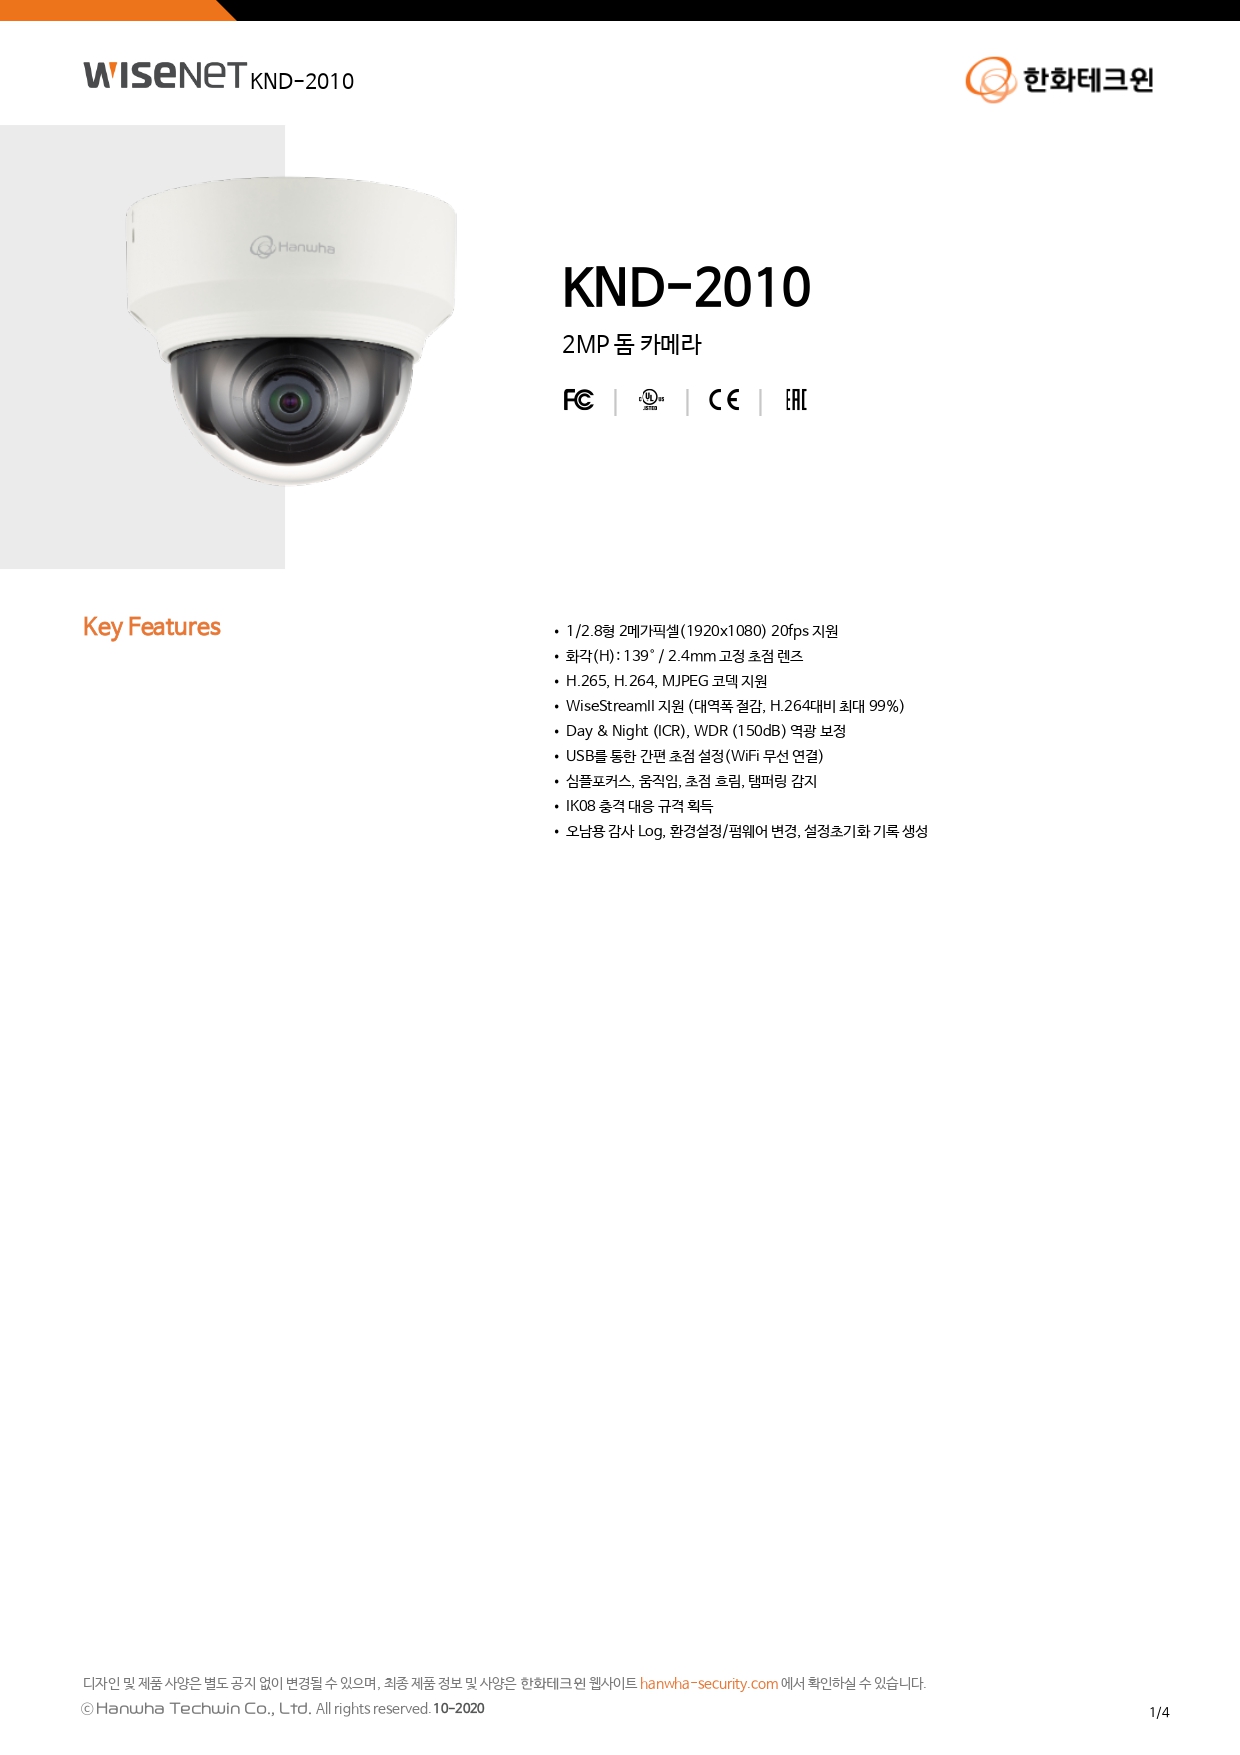 DataSheet_KND-2010_KO(1)_page-0001_212547.jpg